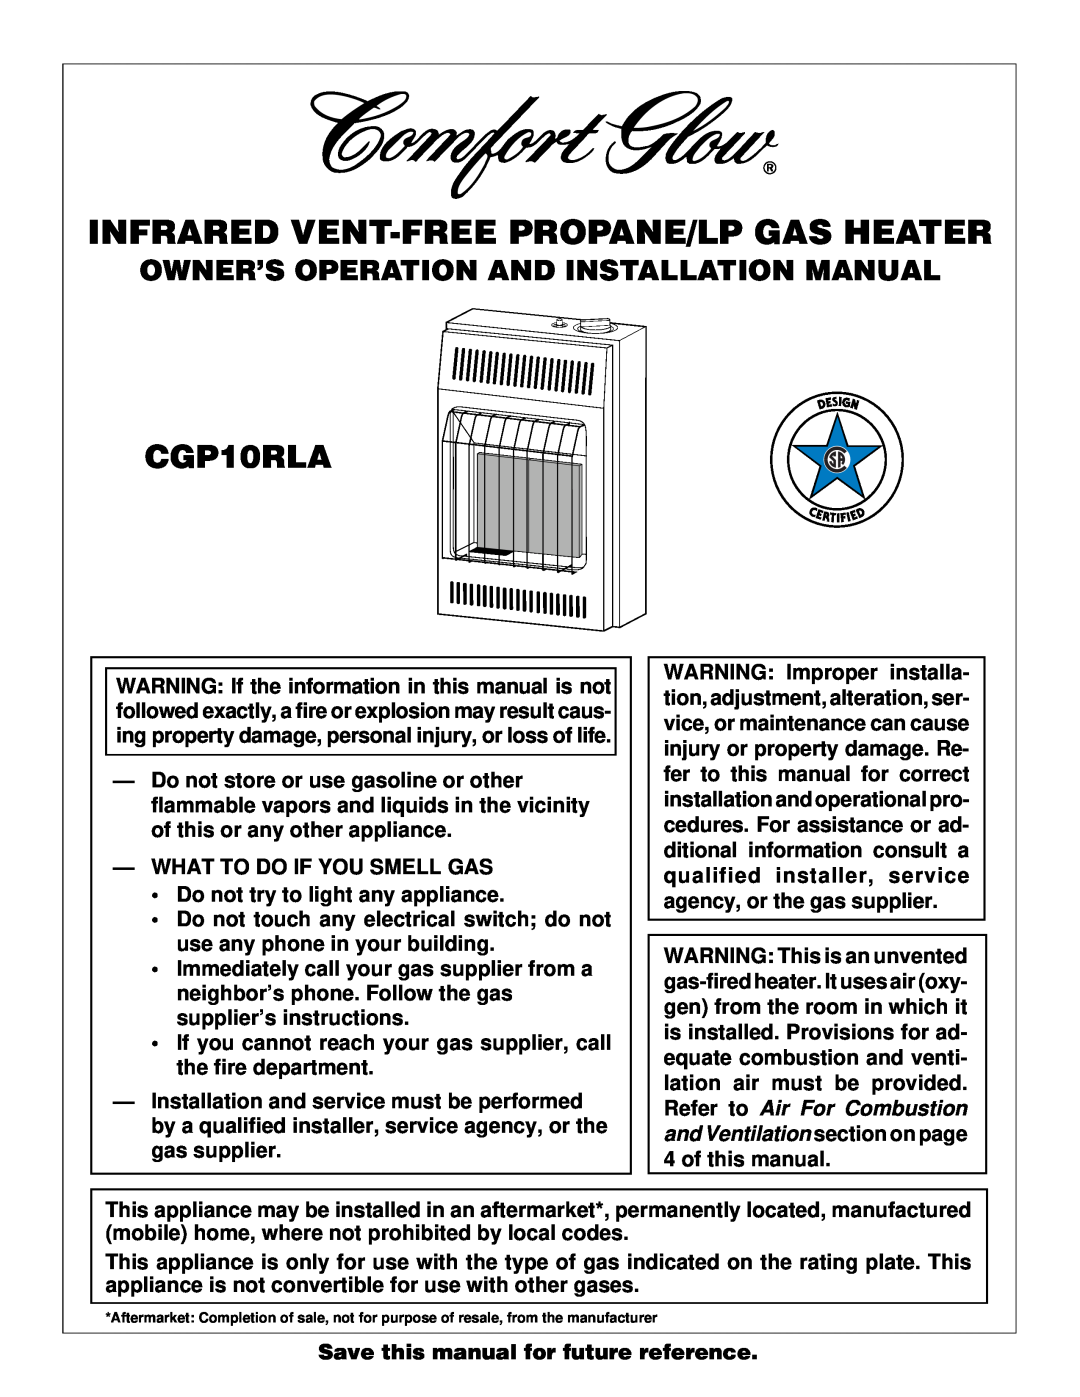 Desa CGP10RLA installation manual Owner’S Operation And Installation Manual, Infrared Vent-Freepropane/Lp Gas Heater 